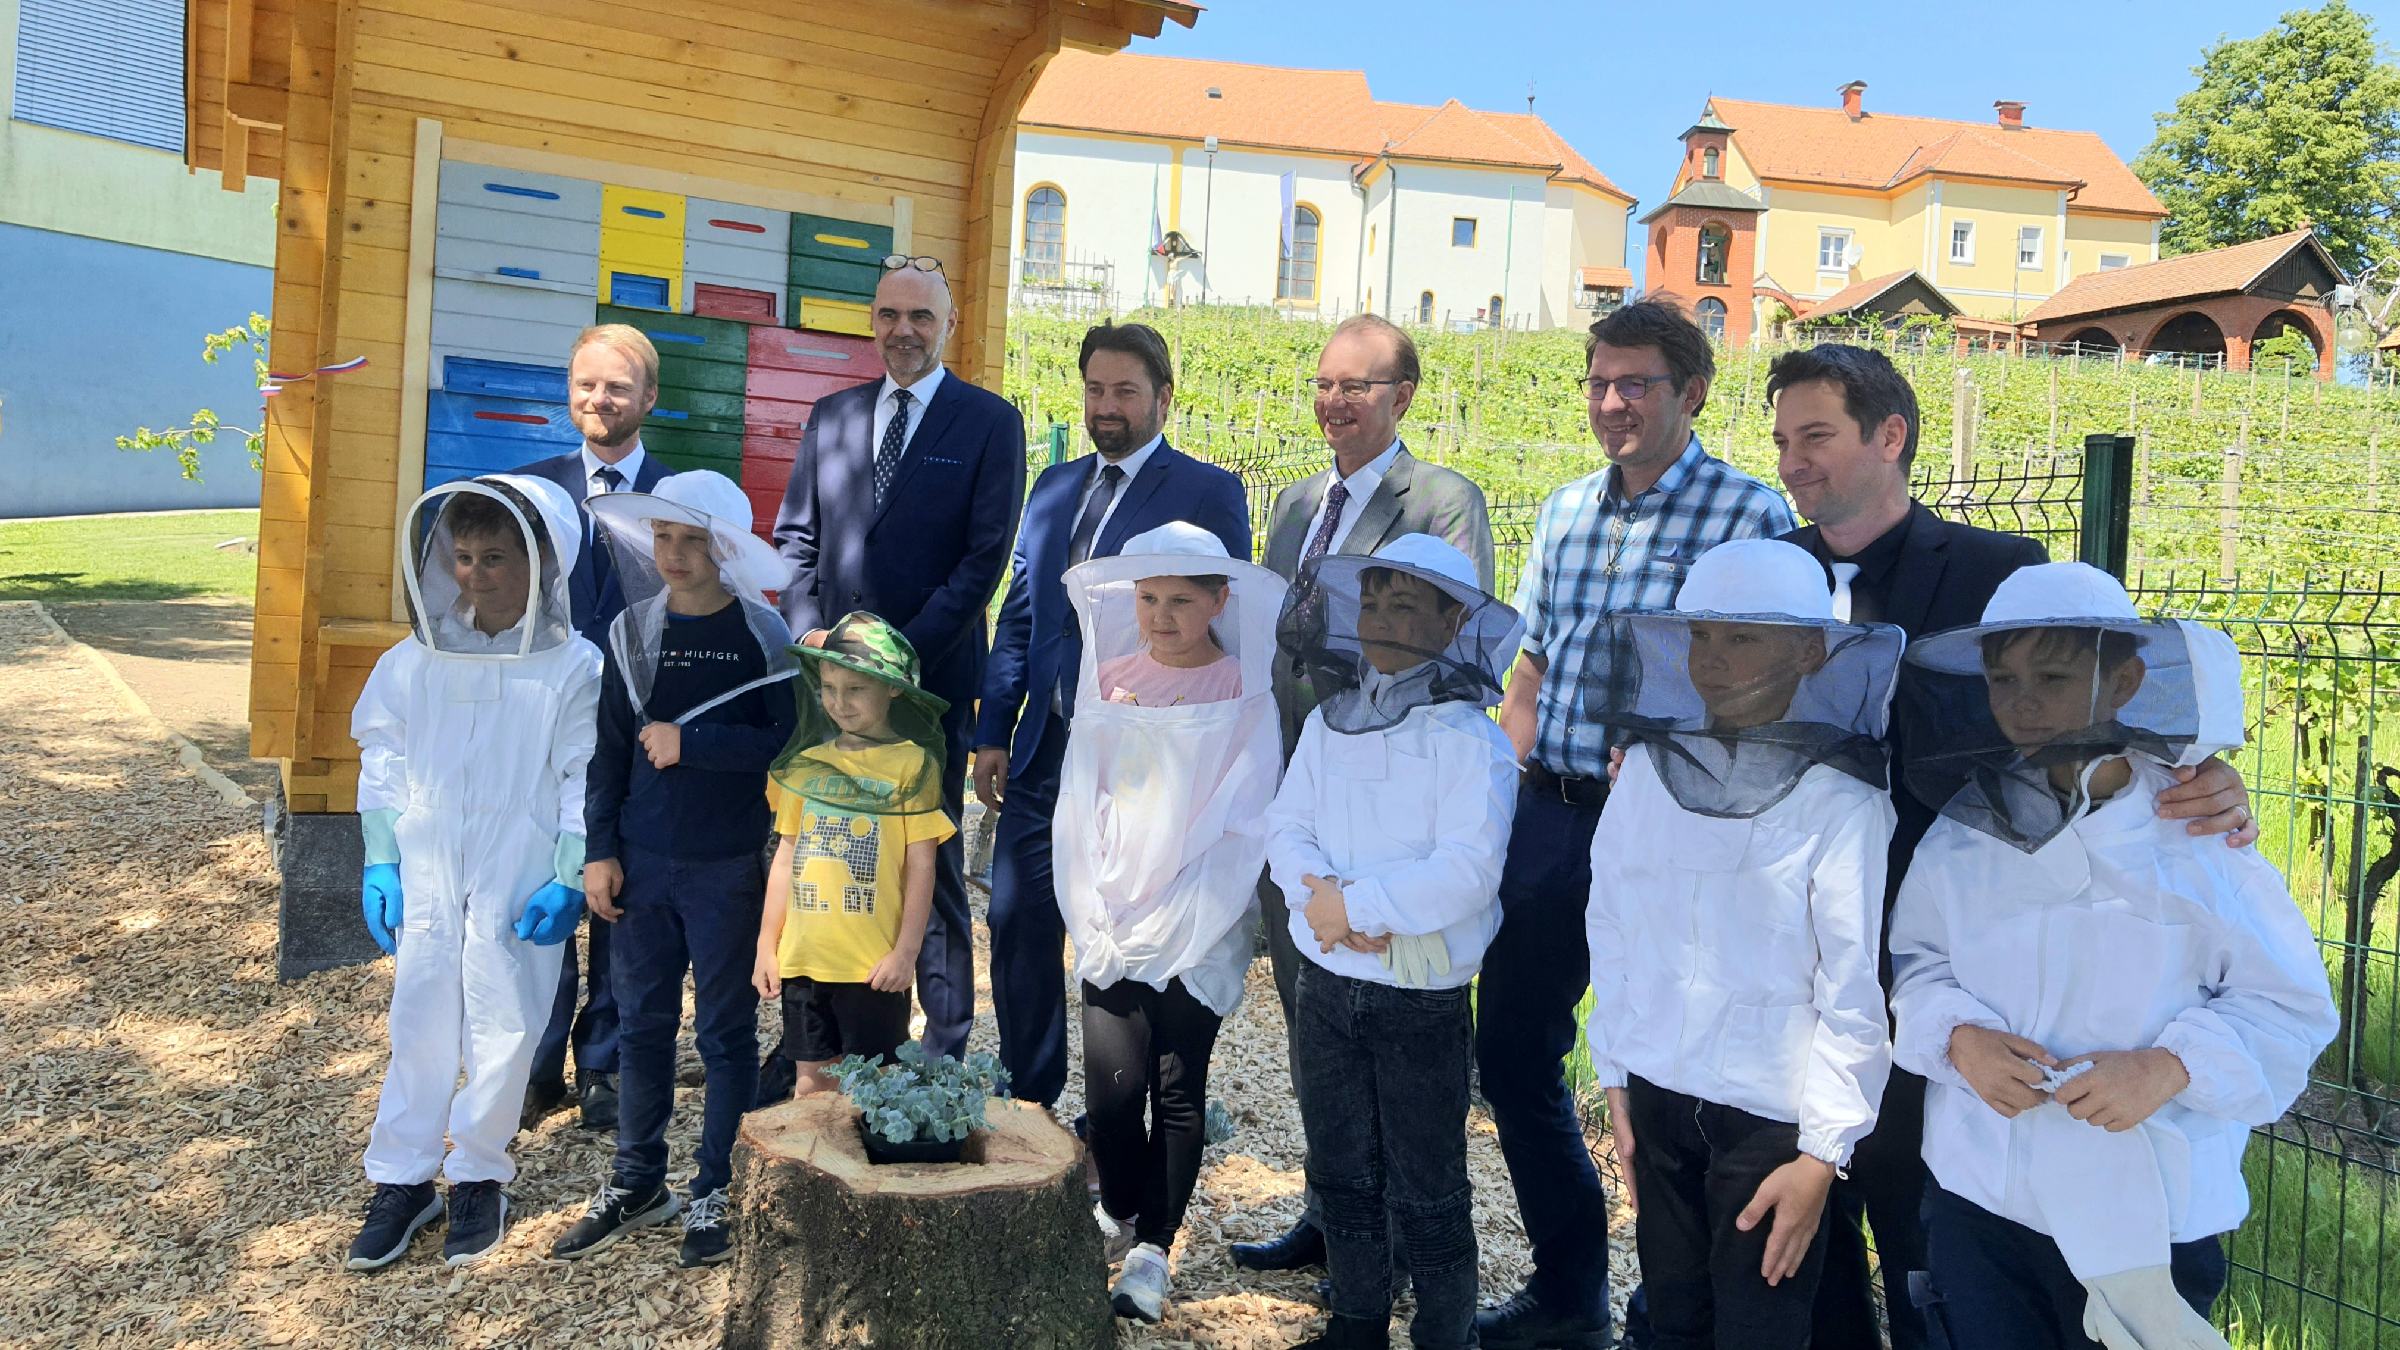 FOTO: Veleposlaništva držav Beneluksa korenški osnovni šoli podarila učni čebelnjak